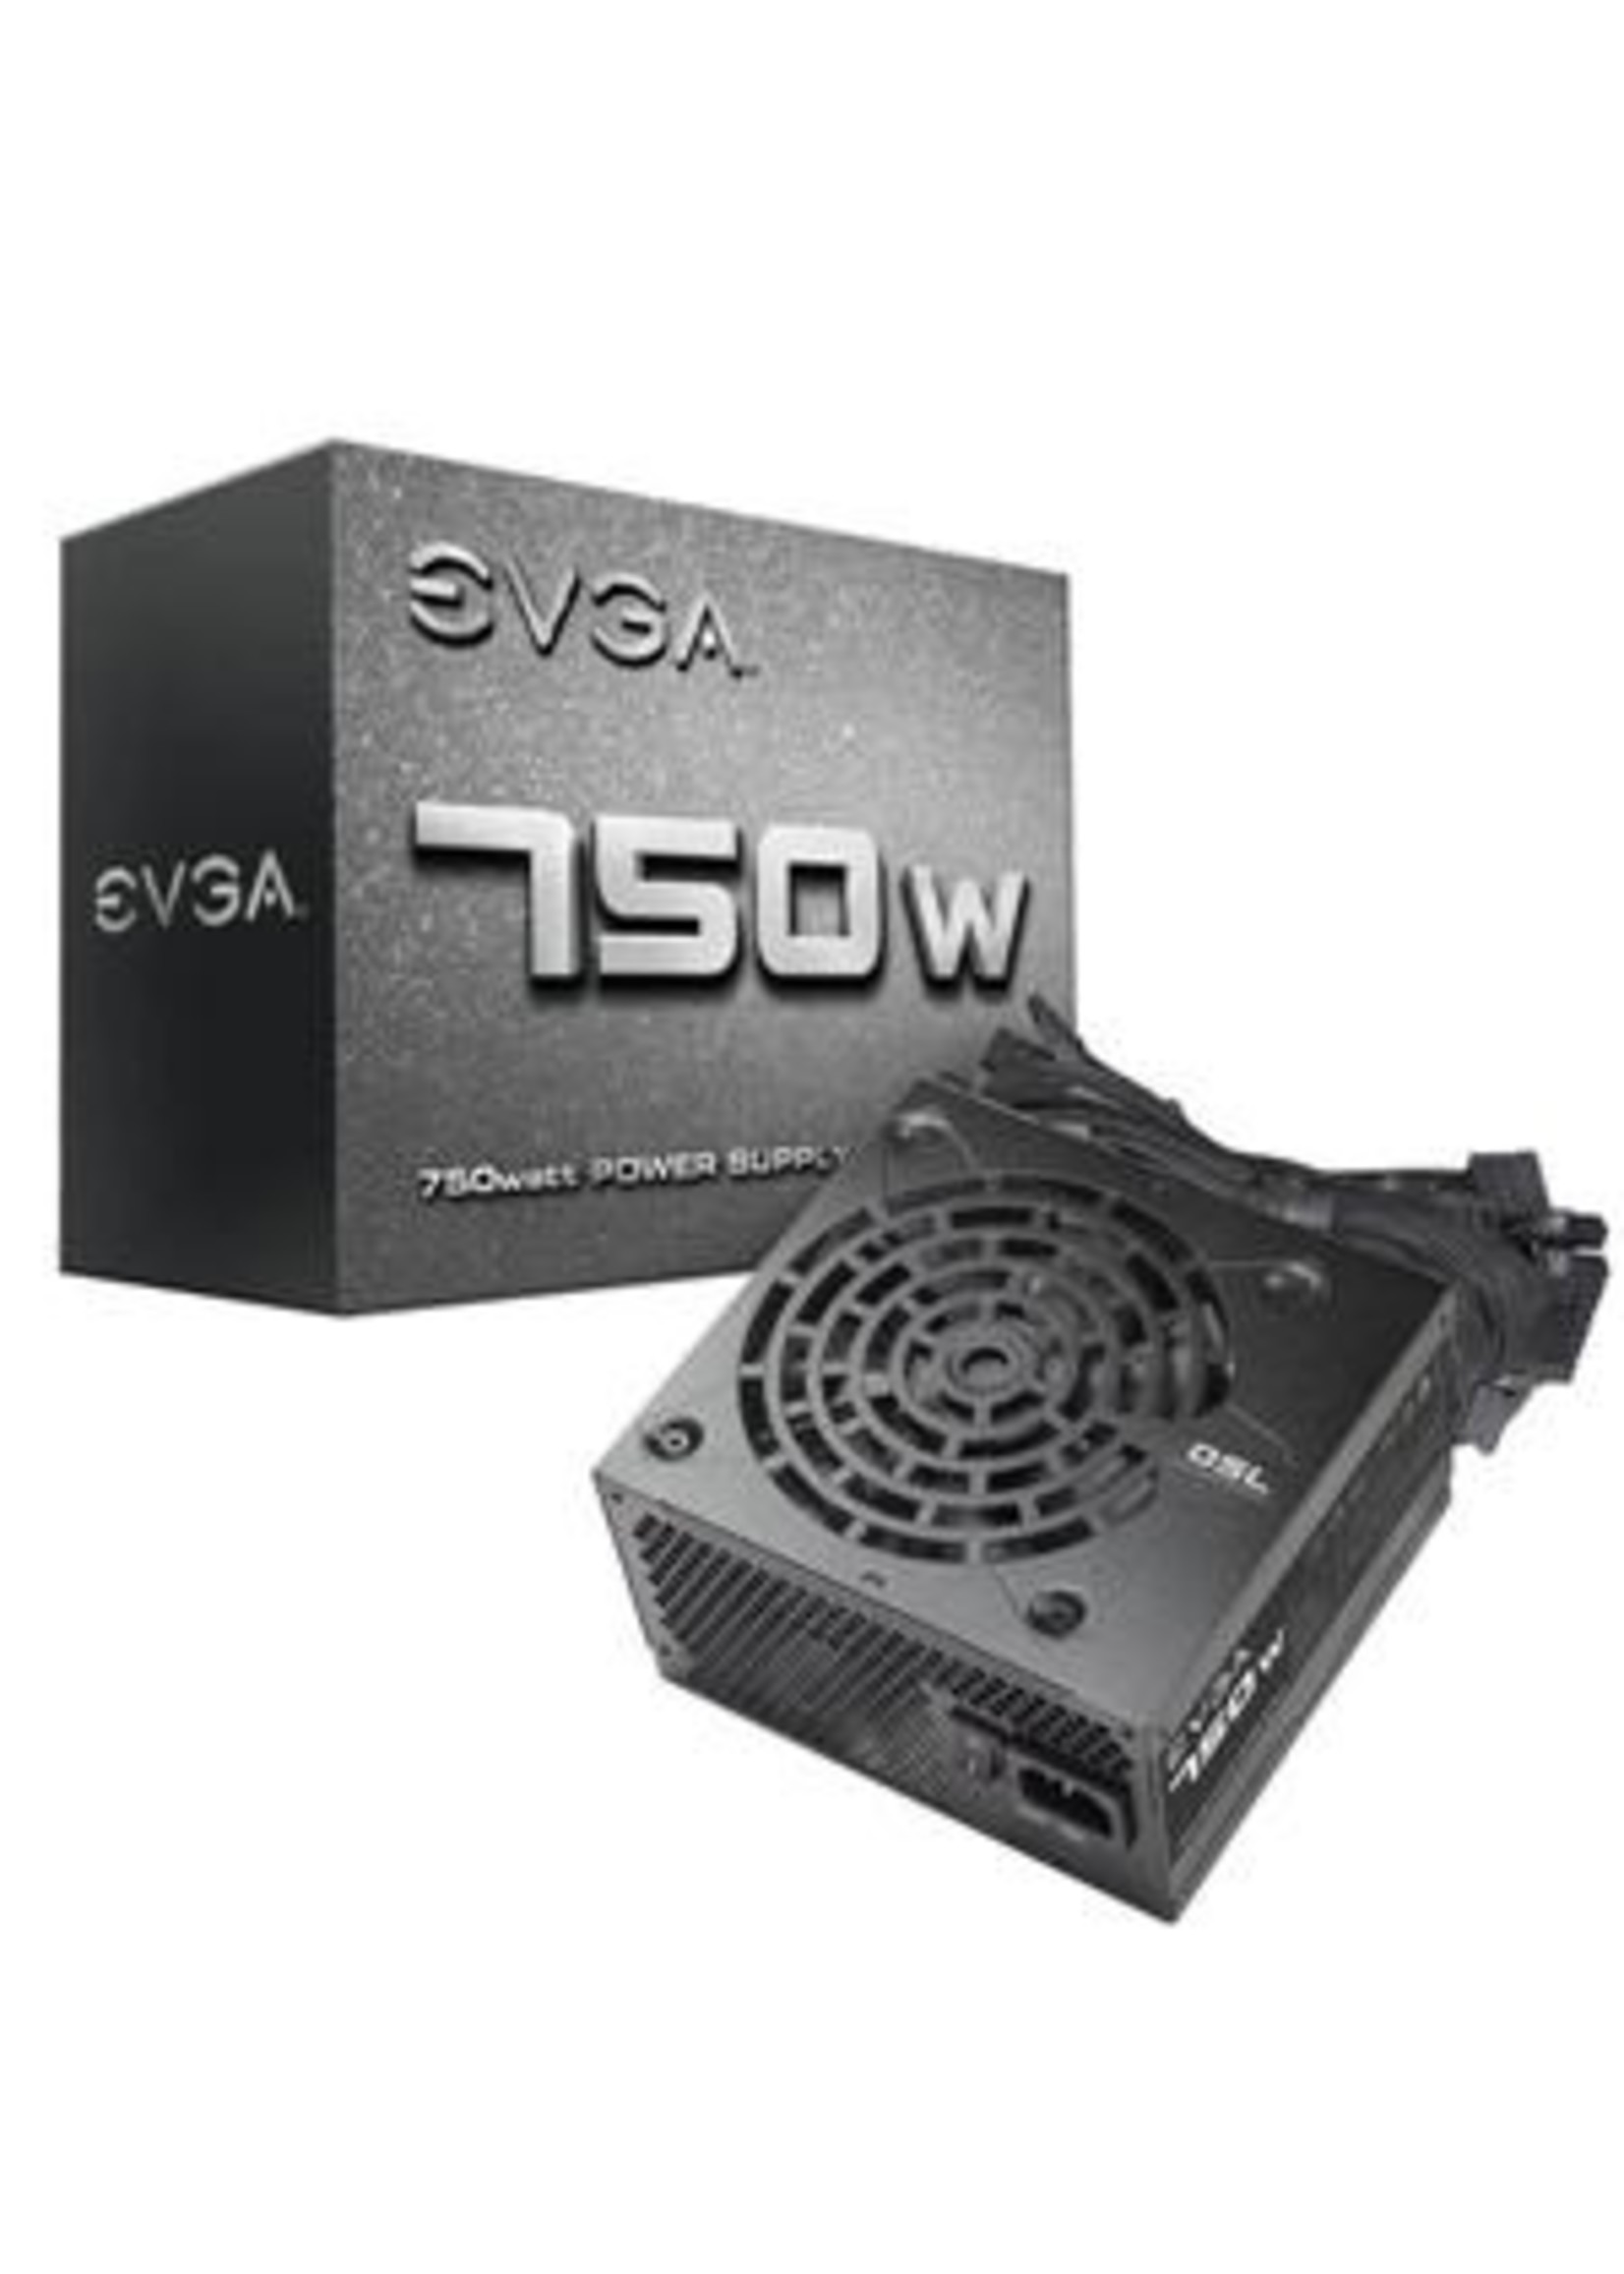 EVGA 750W Power Supply